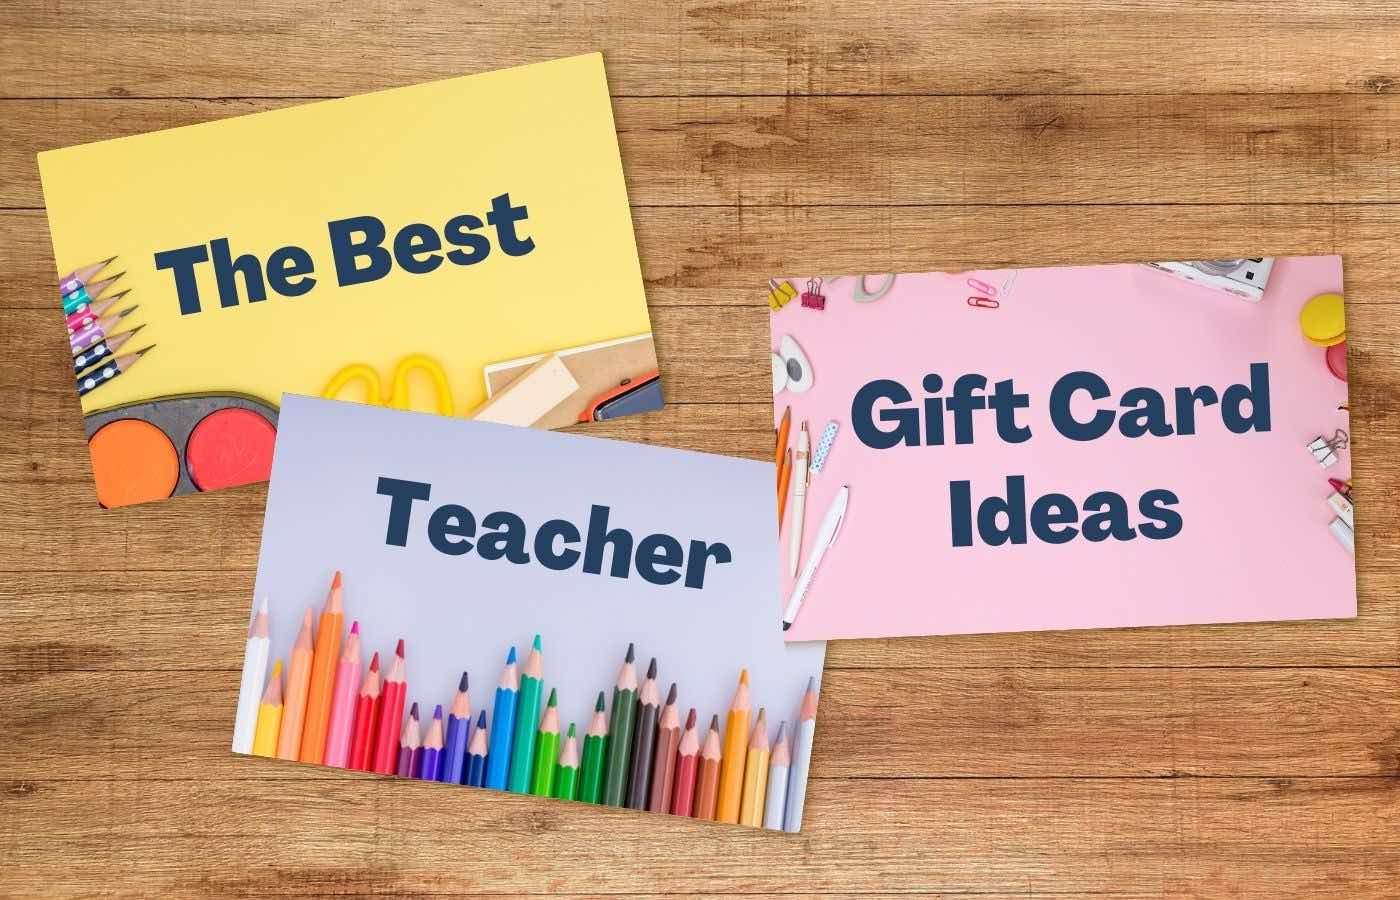 Three teacher-themed gift cards on a table. The gift cards say "The Best Teacher Gift Card Ideas."